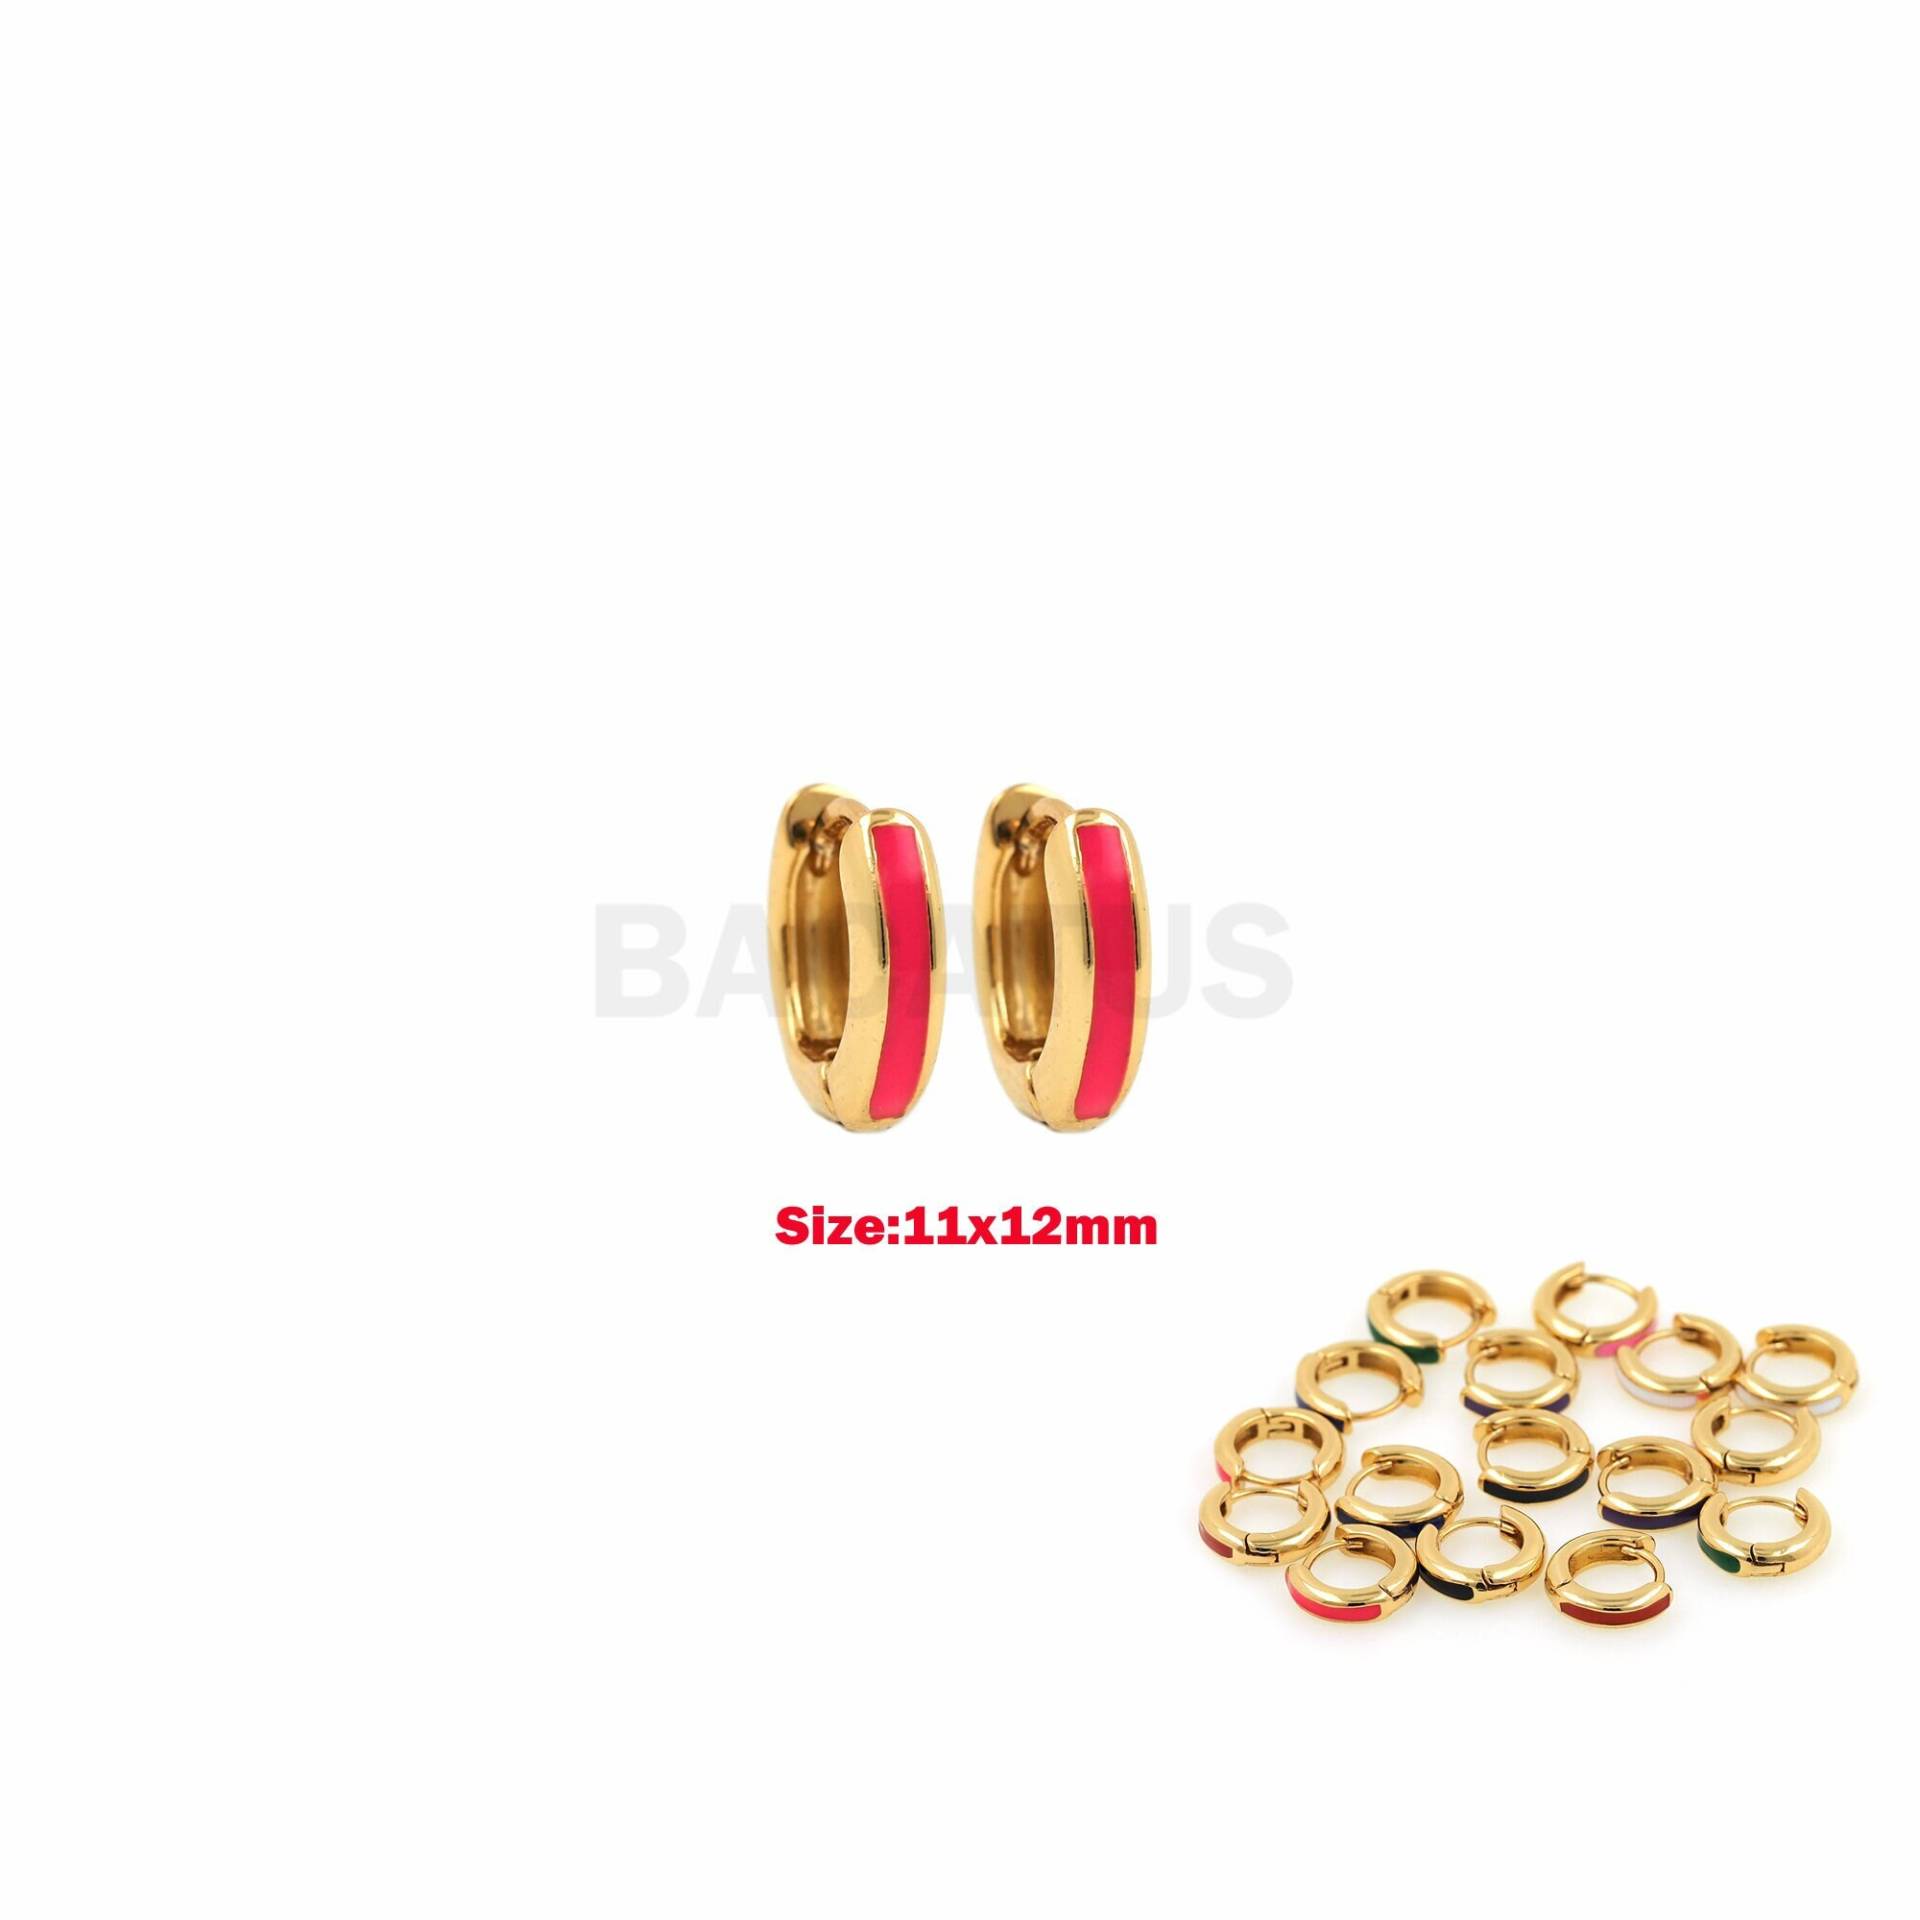 Emaille Ohrringe, Runde 18K Gold Filled Pierced Ohrring Accessoires, Charm, 11x12mm von BACATUSCR